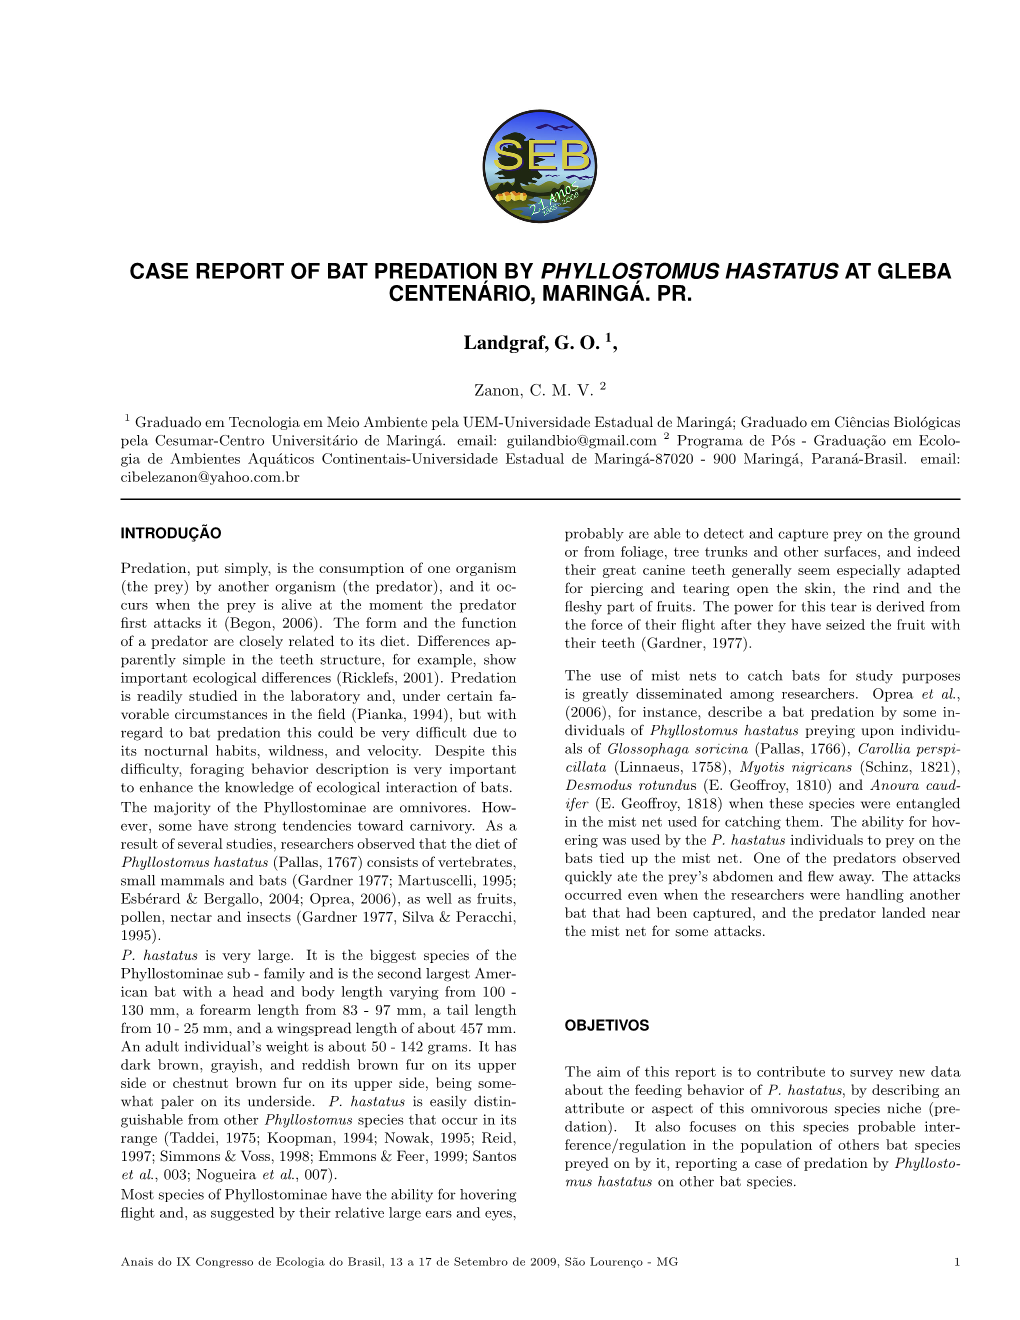 Case Report of Bat Predation by Phyllostomus Hastatus at Gleba Centenario,´ Maringa.´ Pr